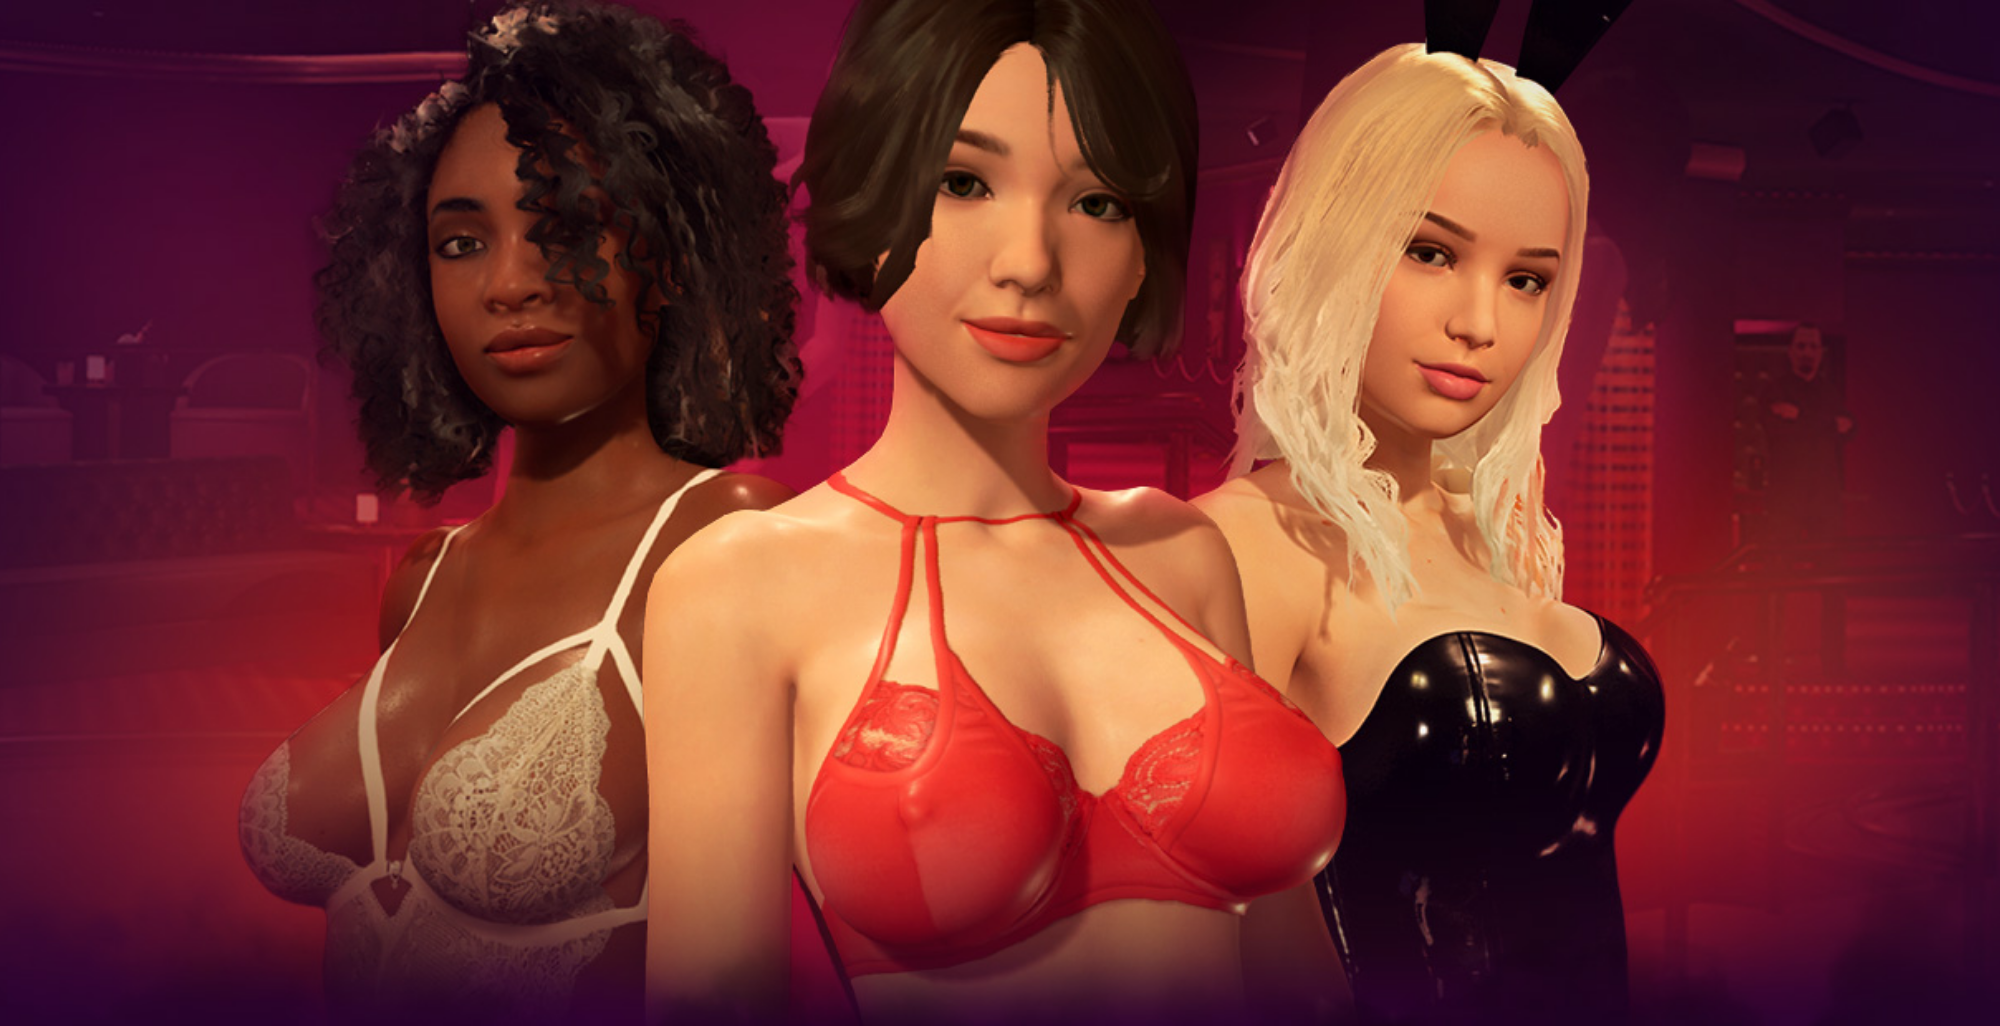 Virtual stripper game